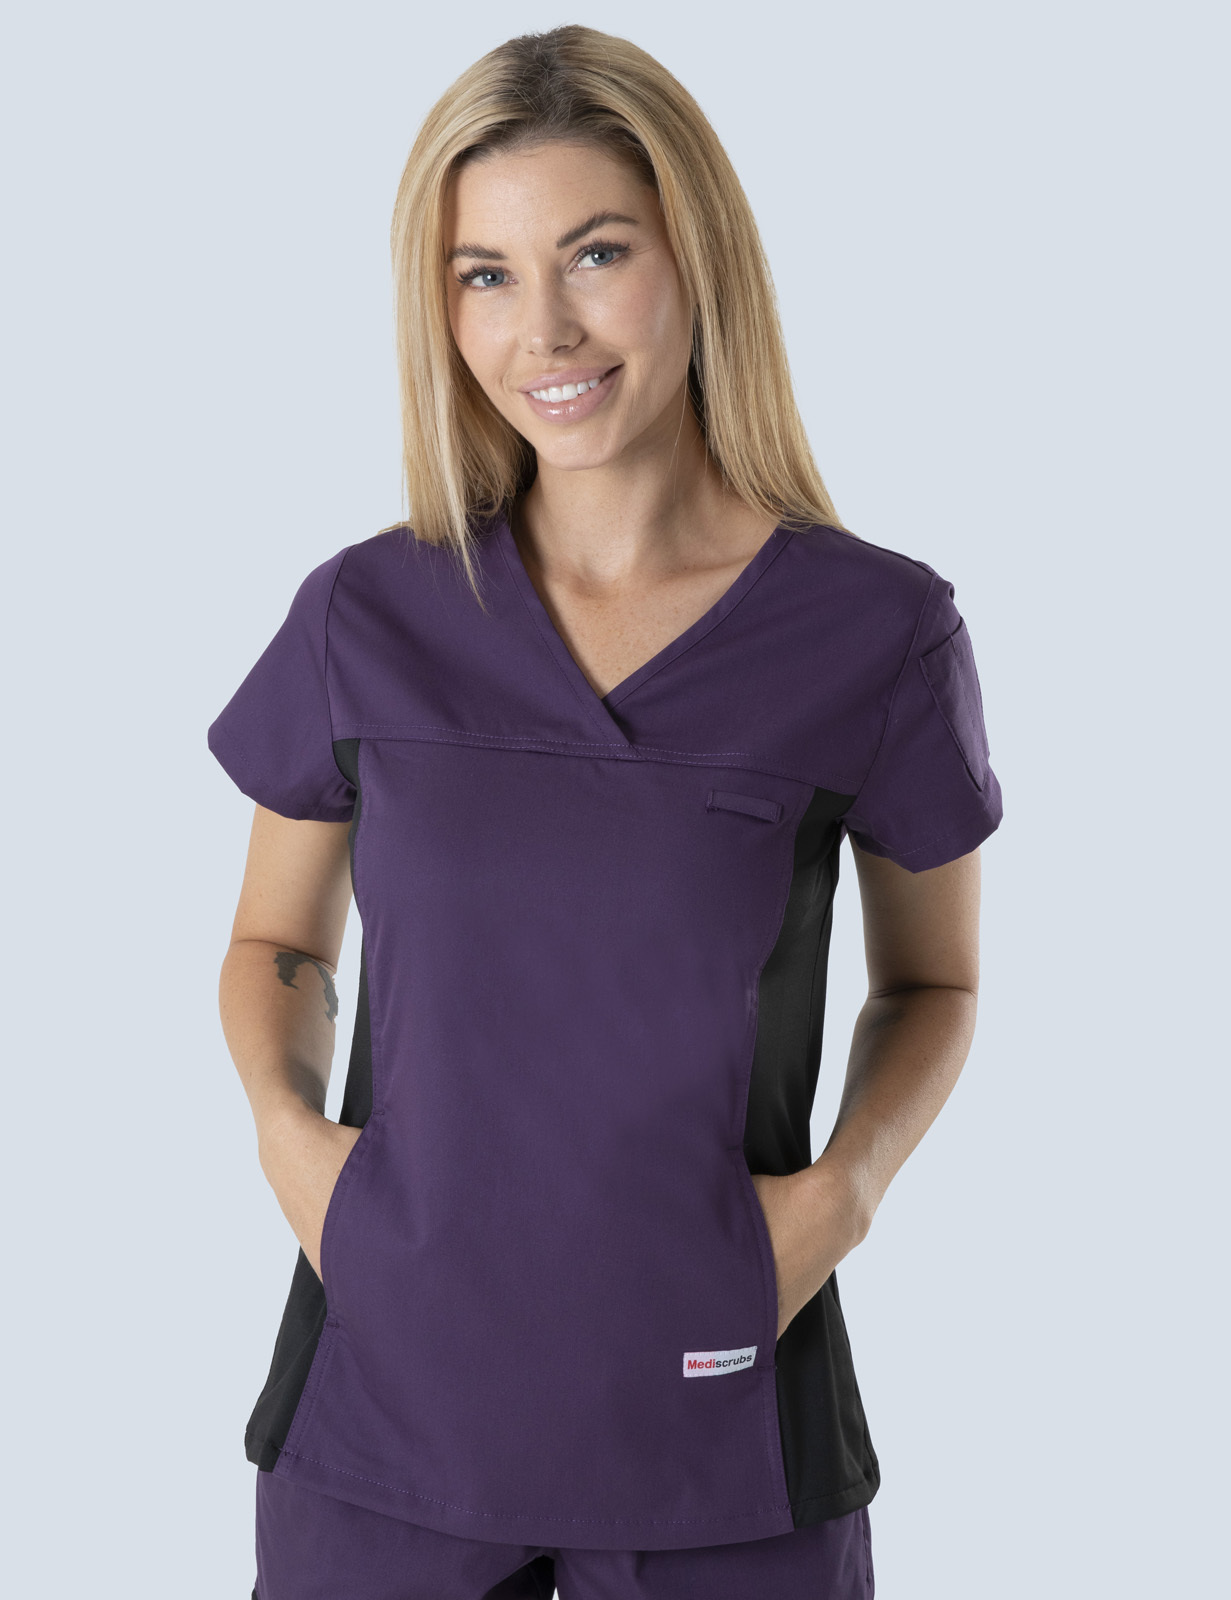 Palm Island Hospital - Nursing (Women's Fit Spandex Scrub Top in Aubergine incl Logos)